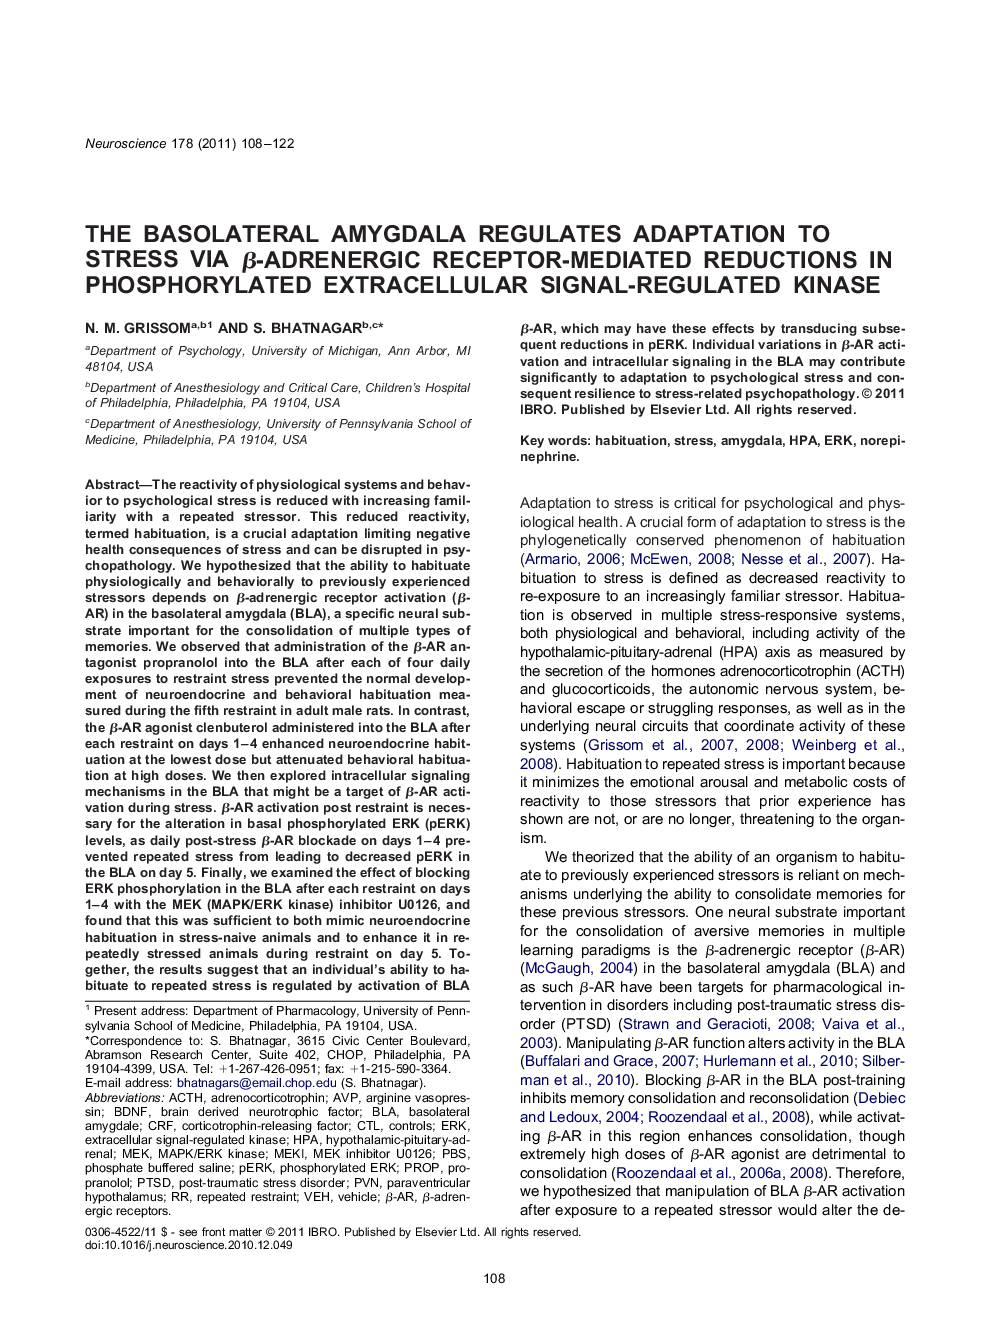 The basolateral amygdala regulates adaptation to stress via β-adrenergic receptor-mediated reductions in phosphorylated extracellular signal-regulated kinase